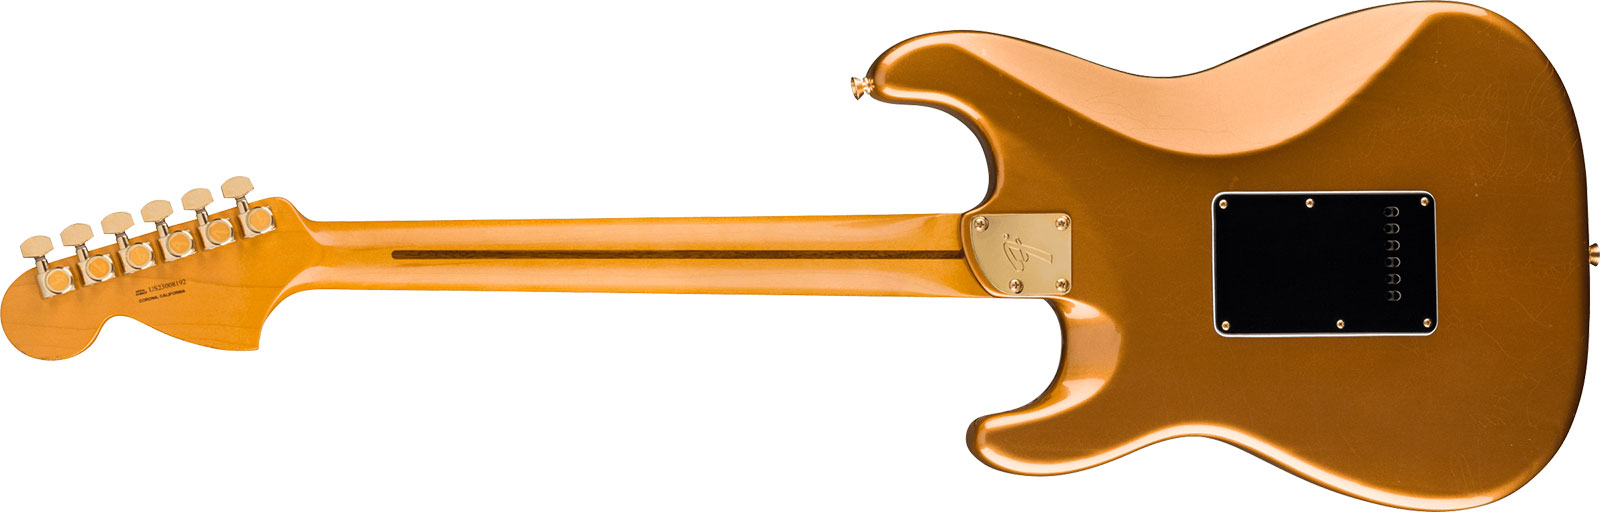 Fender Bruno Mars Strat Usa Signature 3s Trem Mn - Mars Mocha - Guitare Électrique Signature - Variation 1